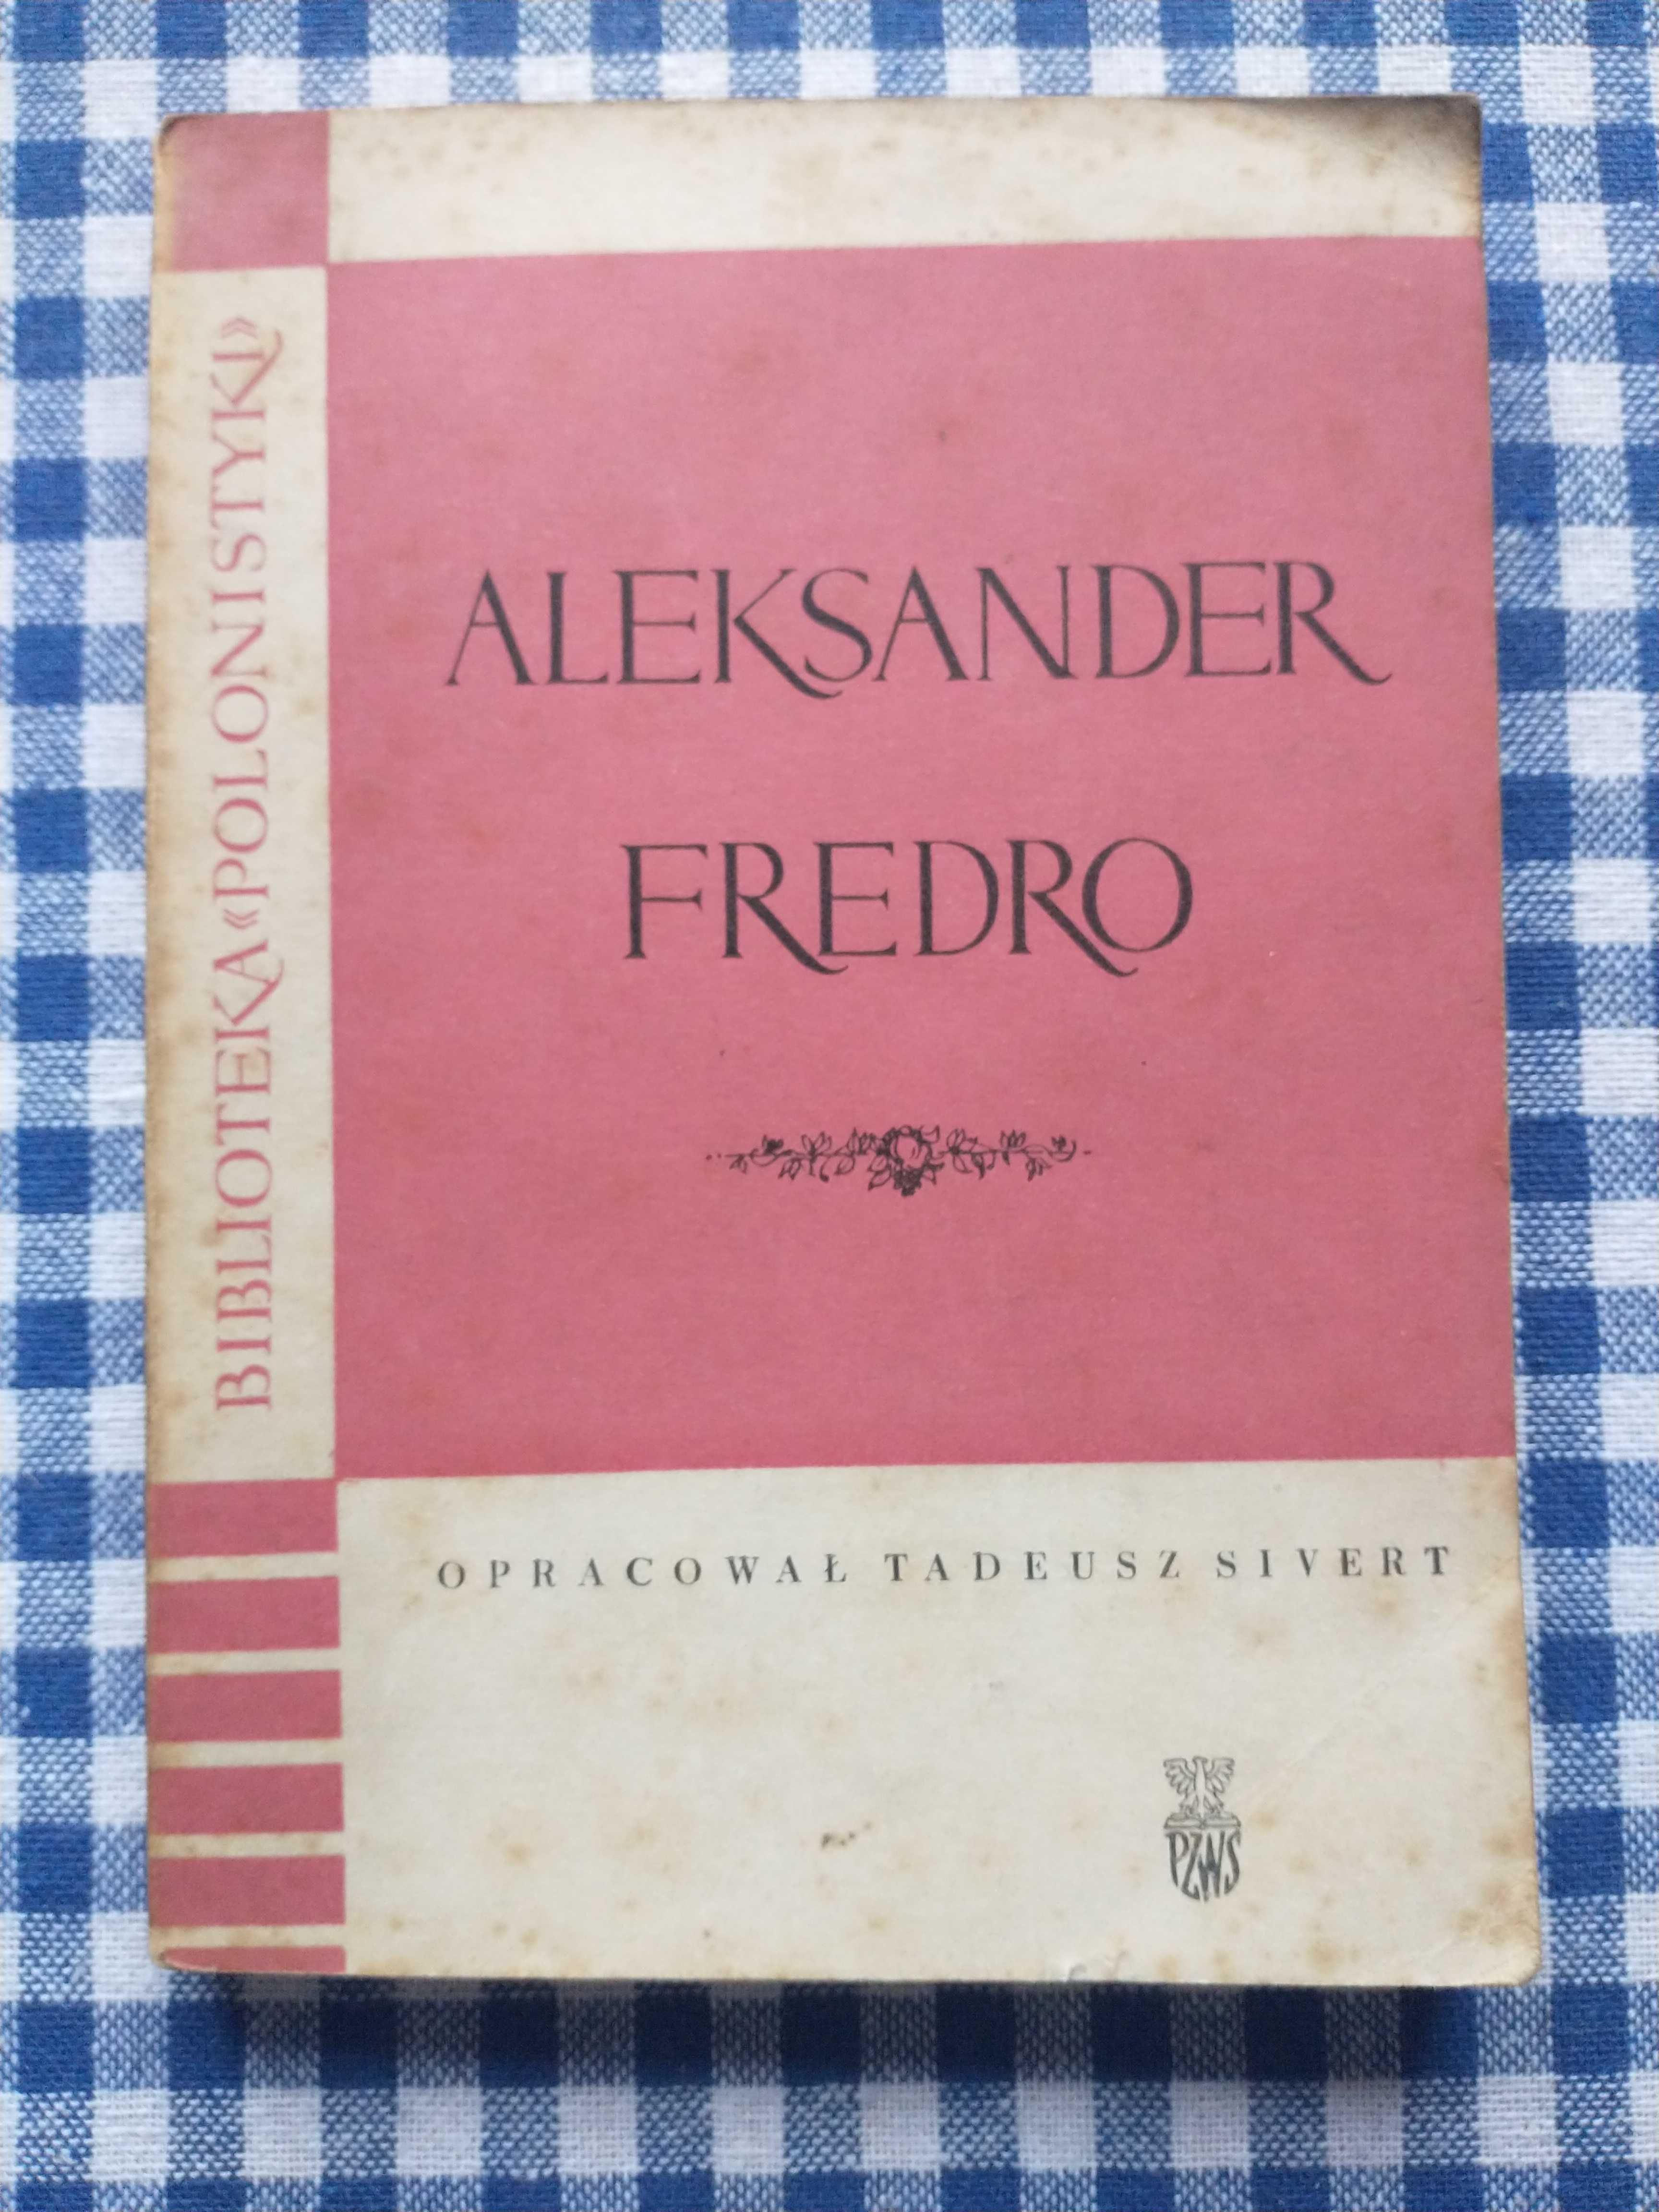 Aleksander Fredro